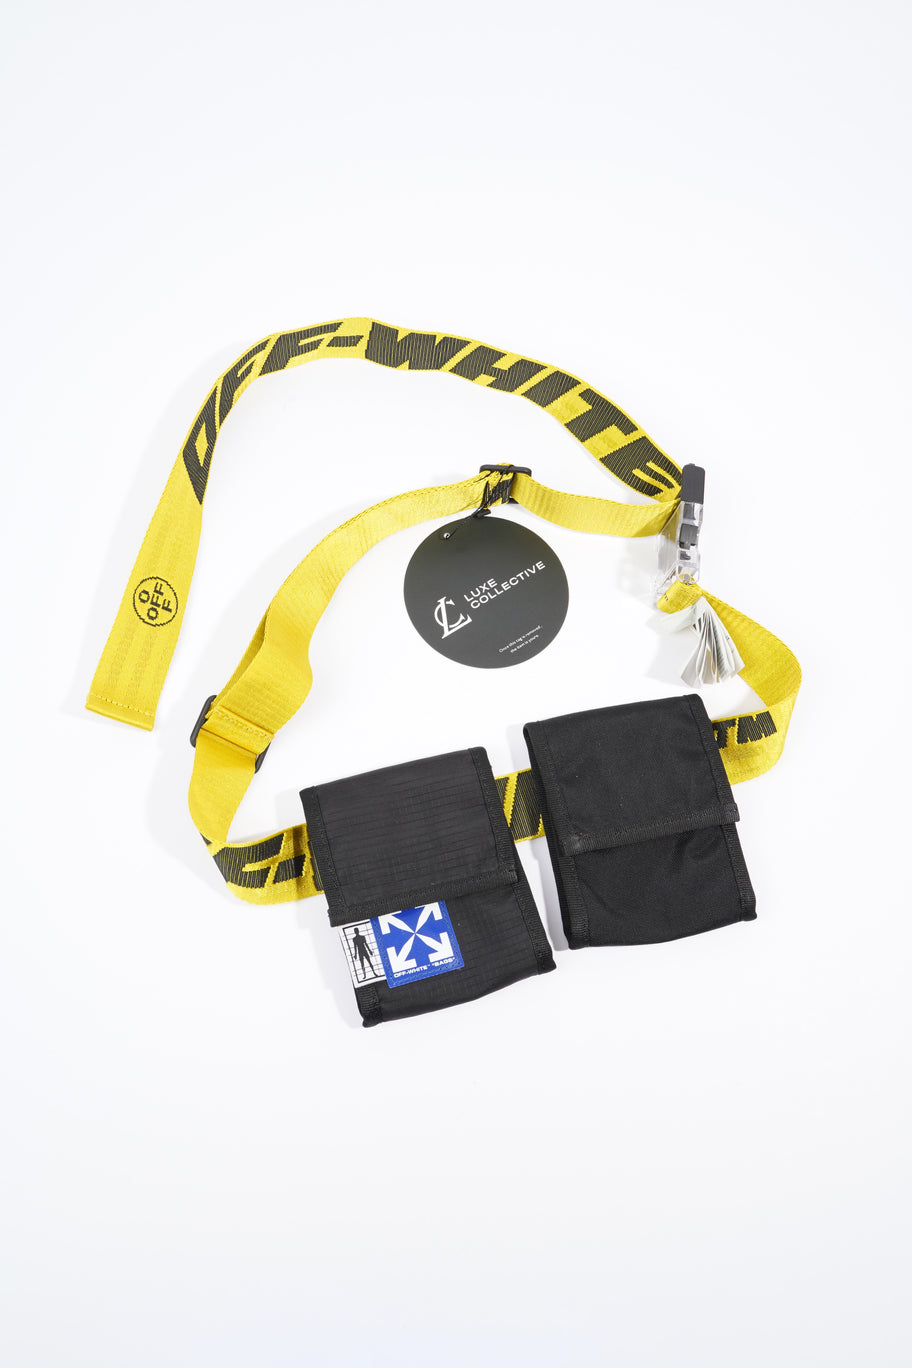 Two Pocket Belt Yellow / Black Fabric Image 10